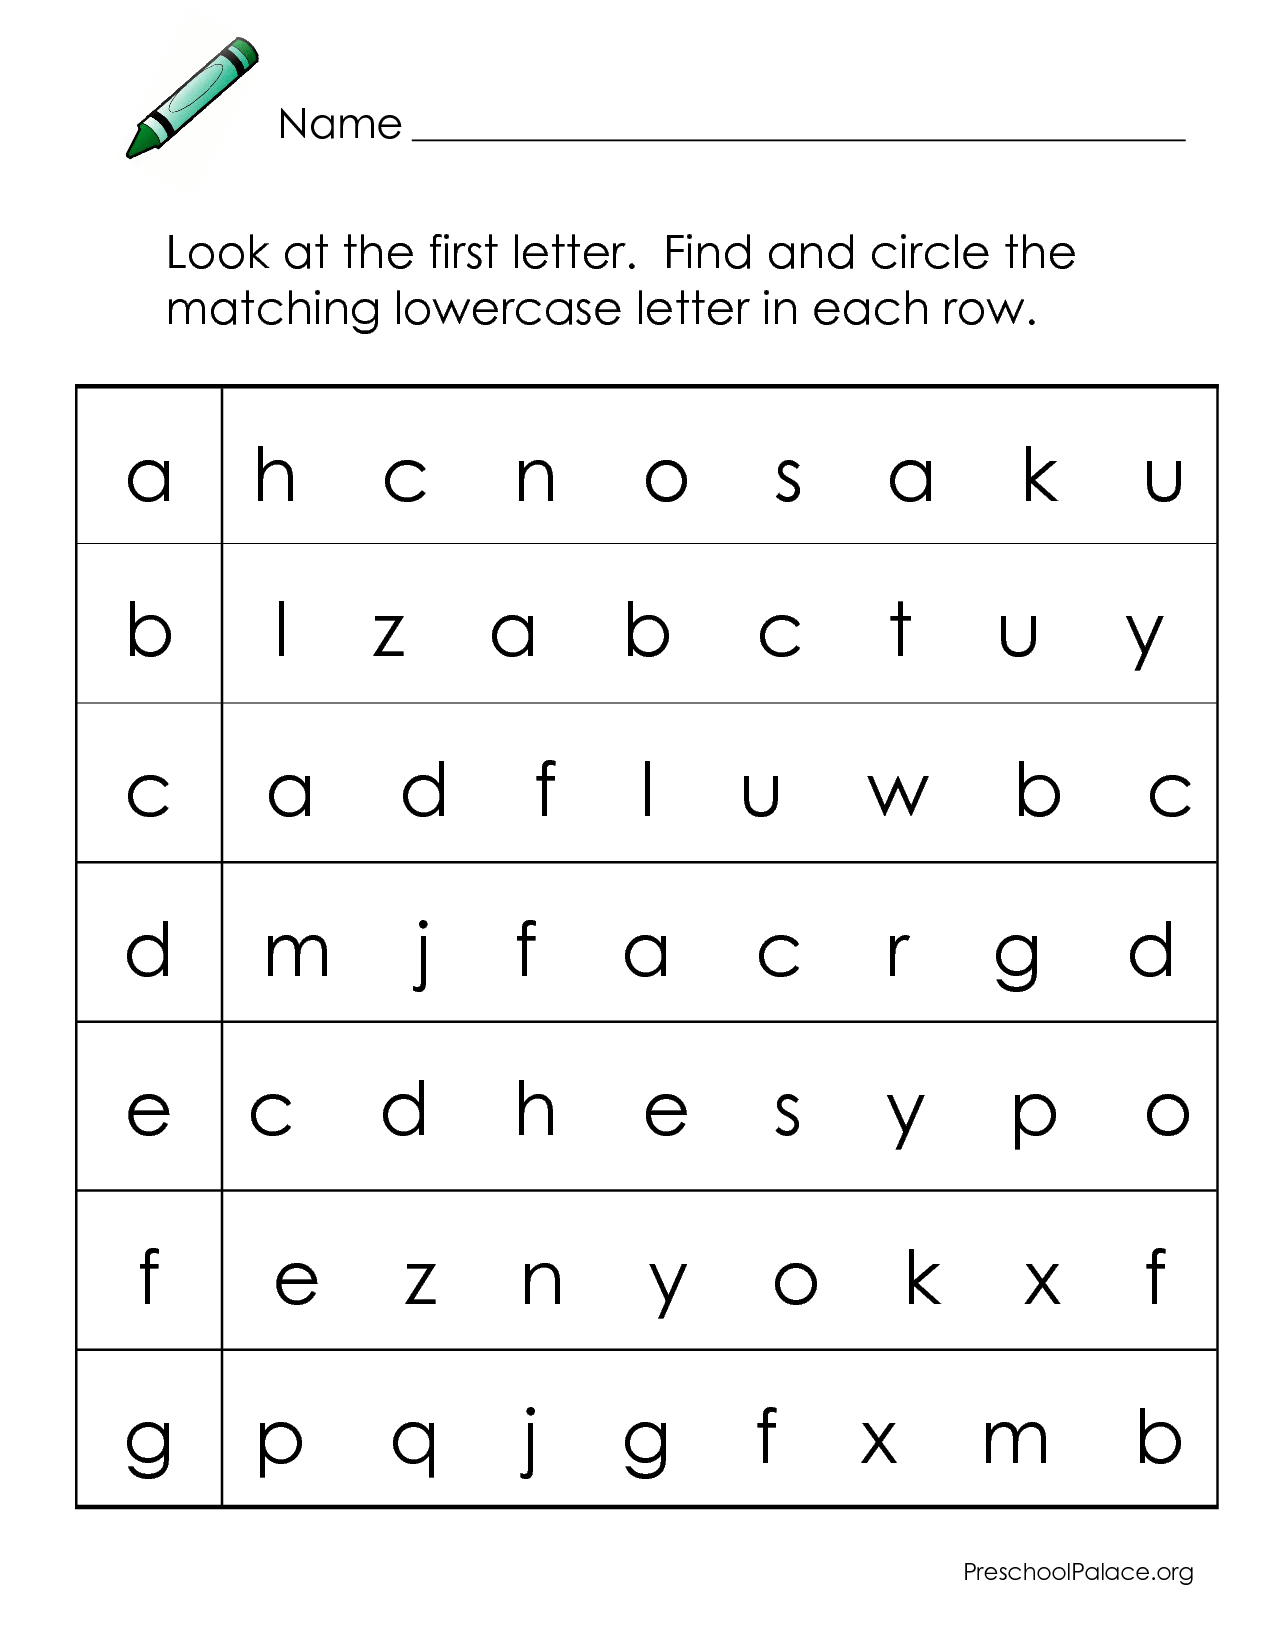 Alphabet Worksheets For Preschoolers | Abcs - Letter within Preschool Alphabet I Worksheets